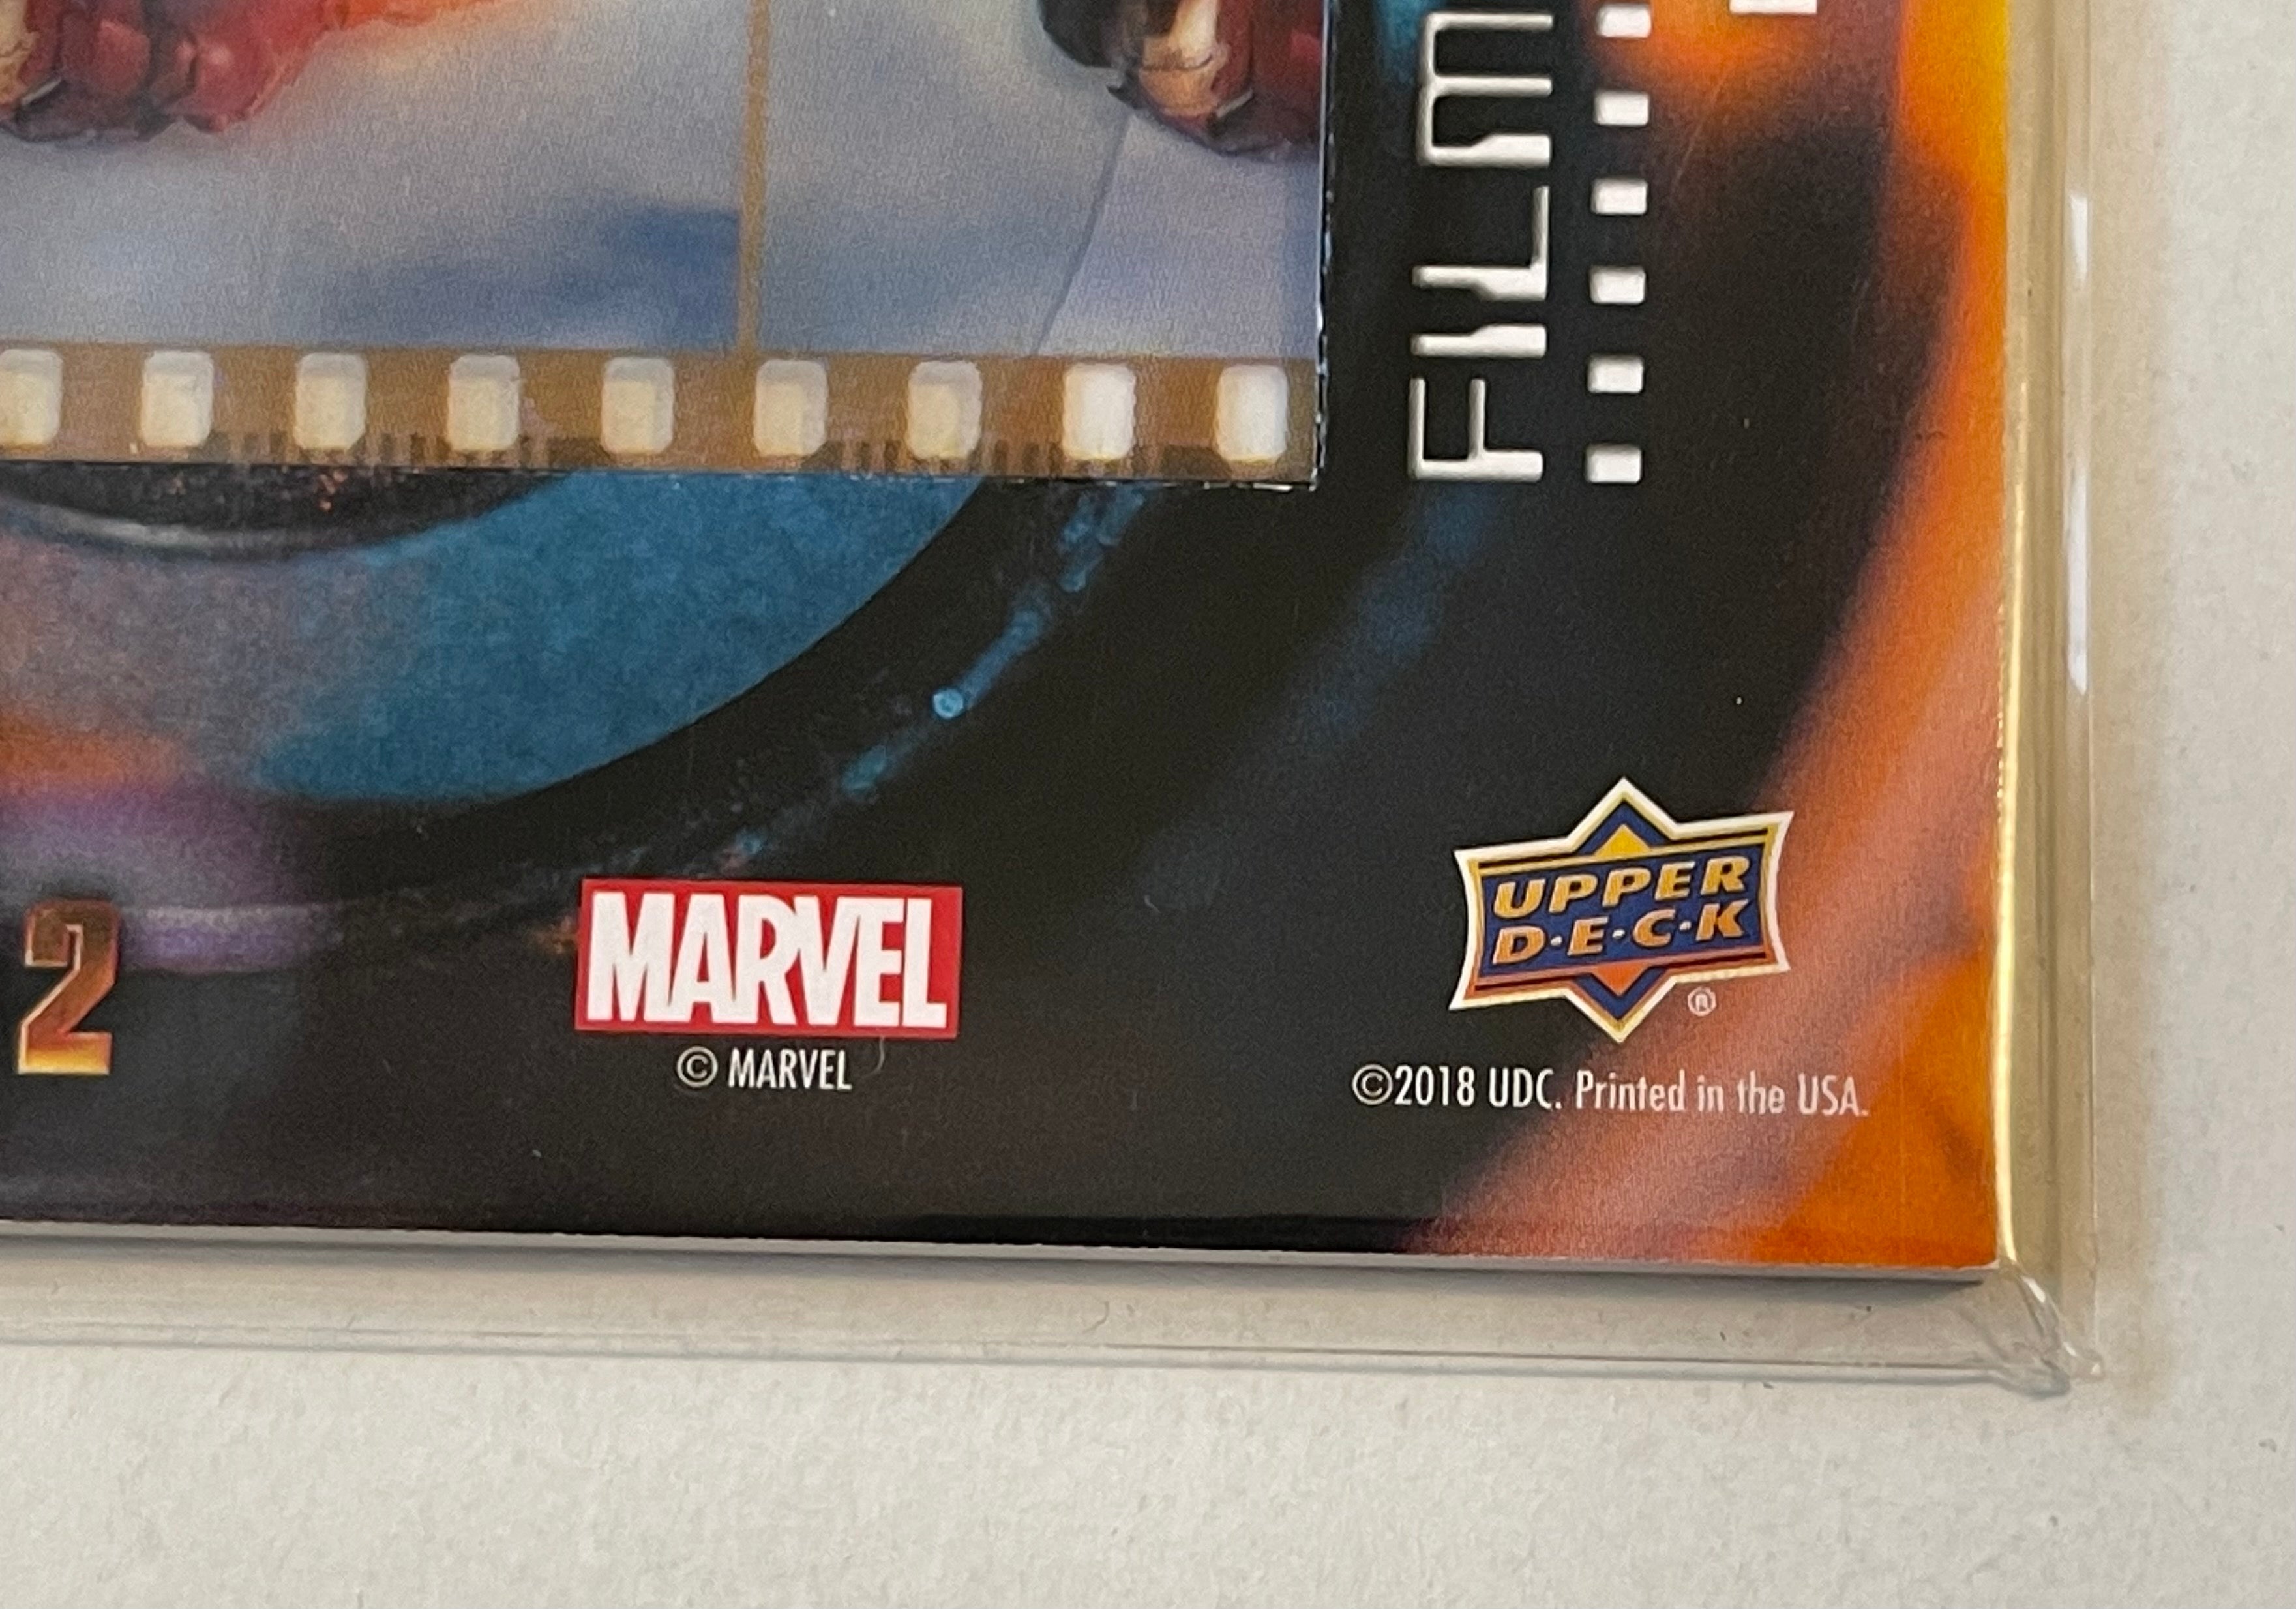 Marvel Upper Deck Iron Man rare film insert card 2018